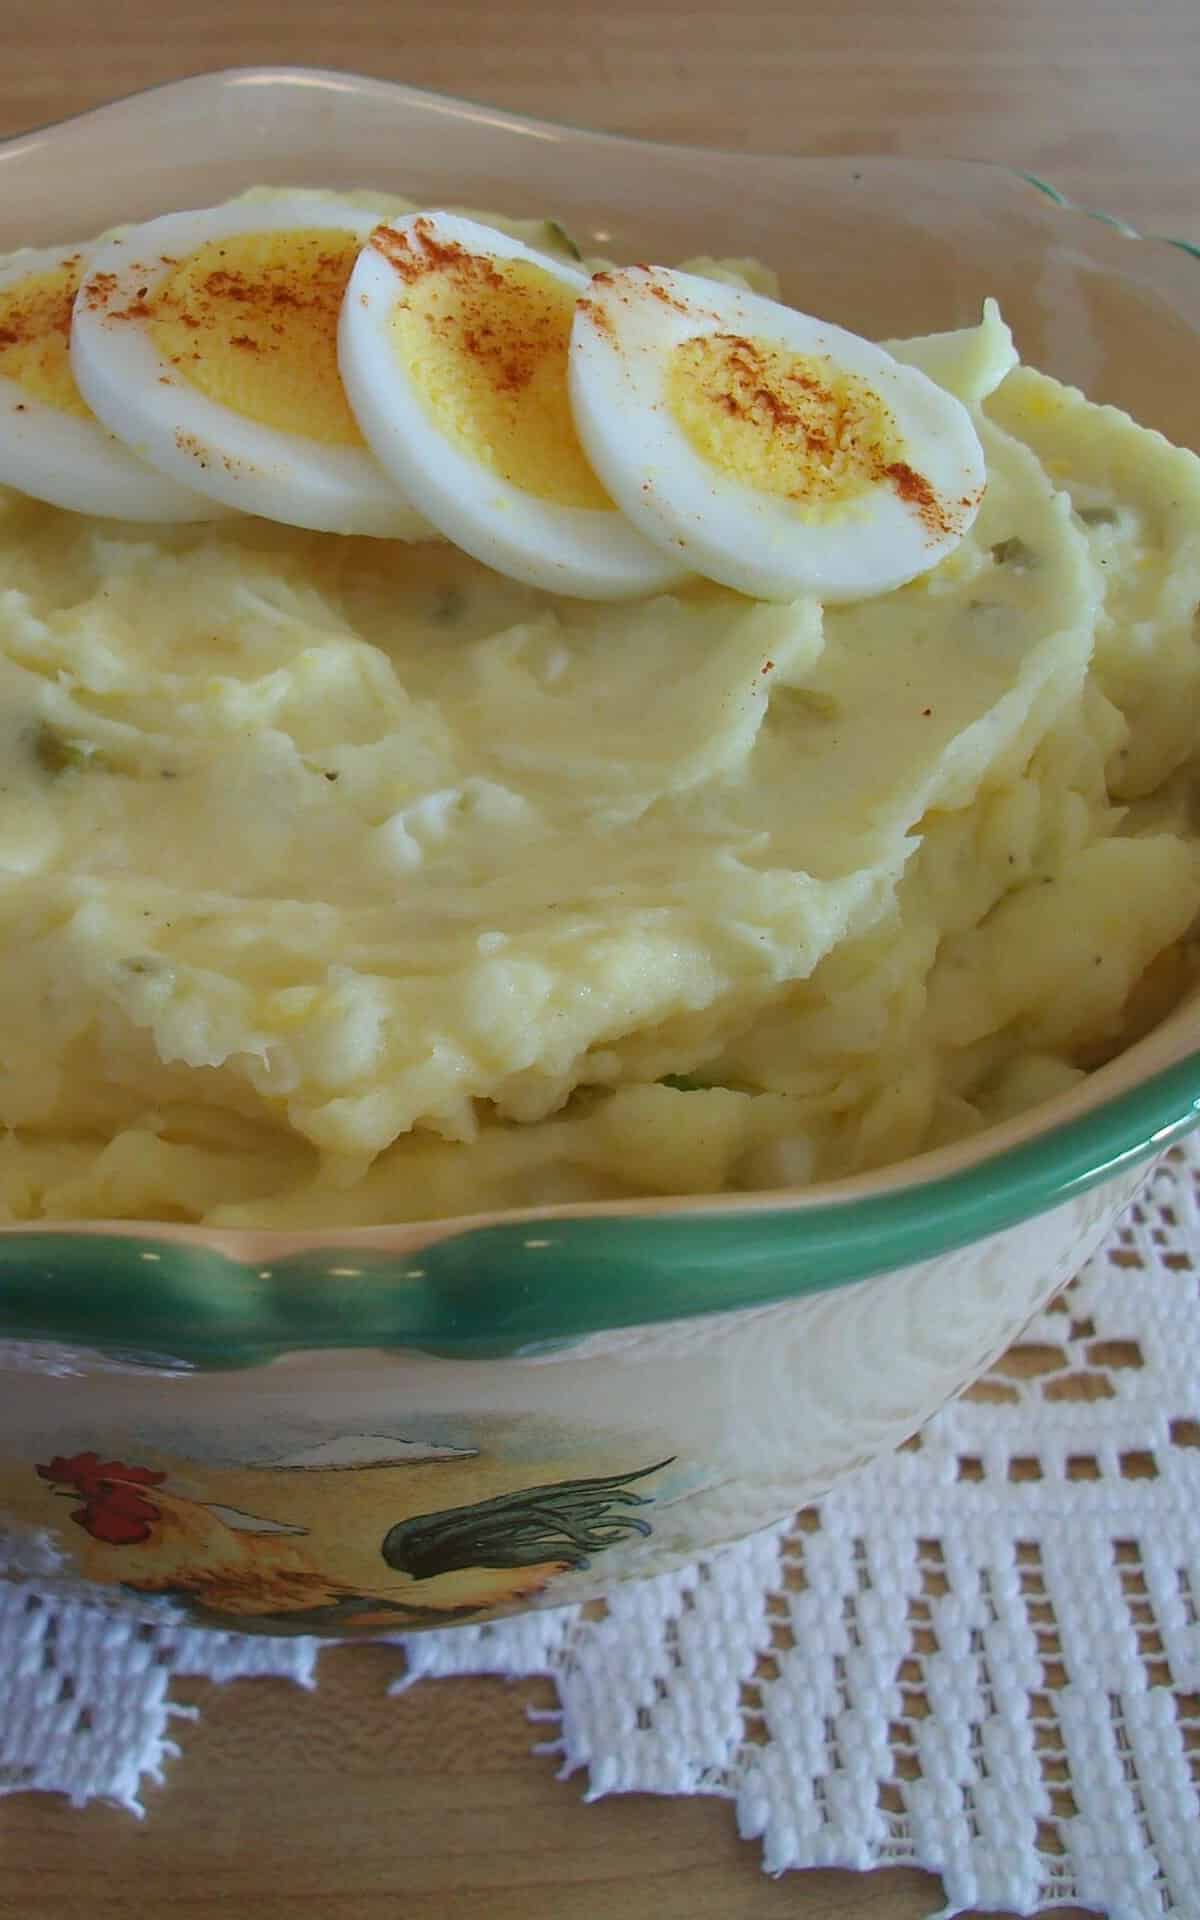  Creamy and dreamy mashed potato salad